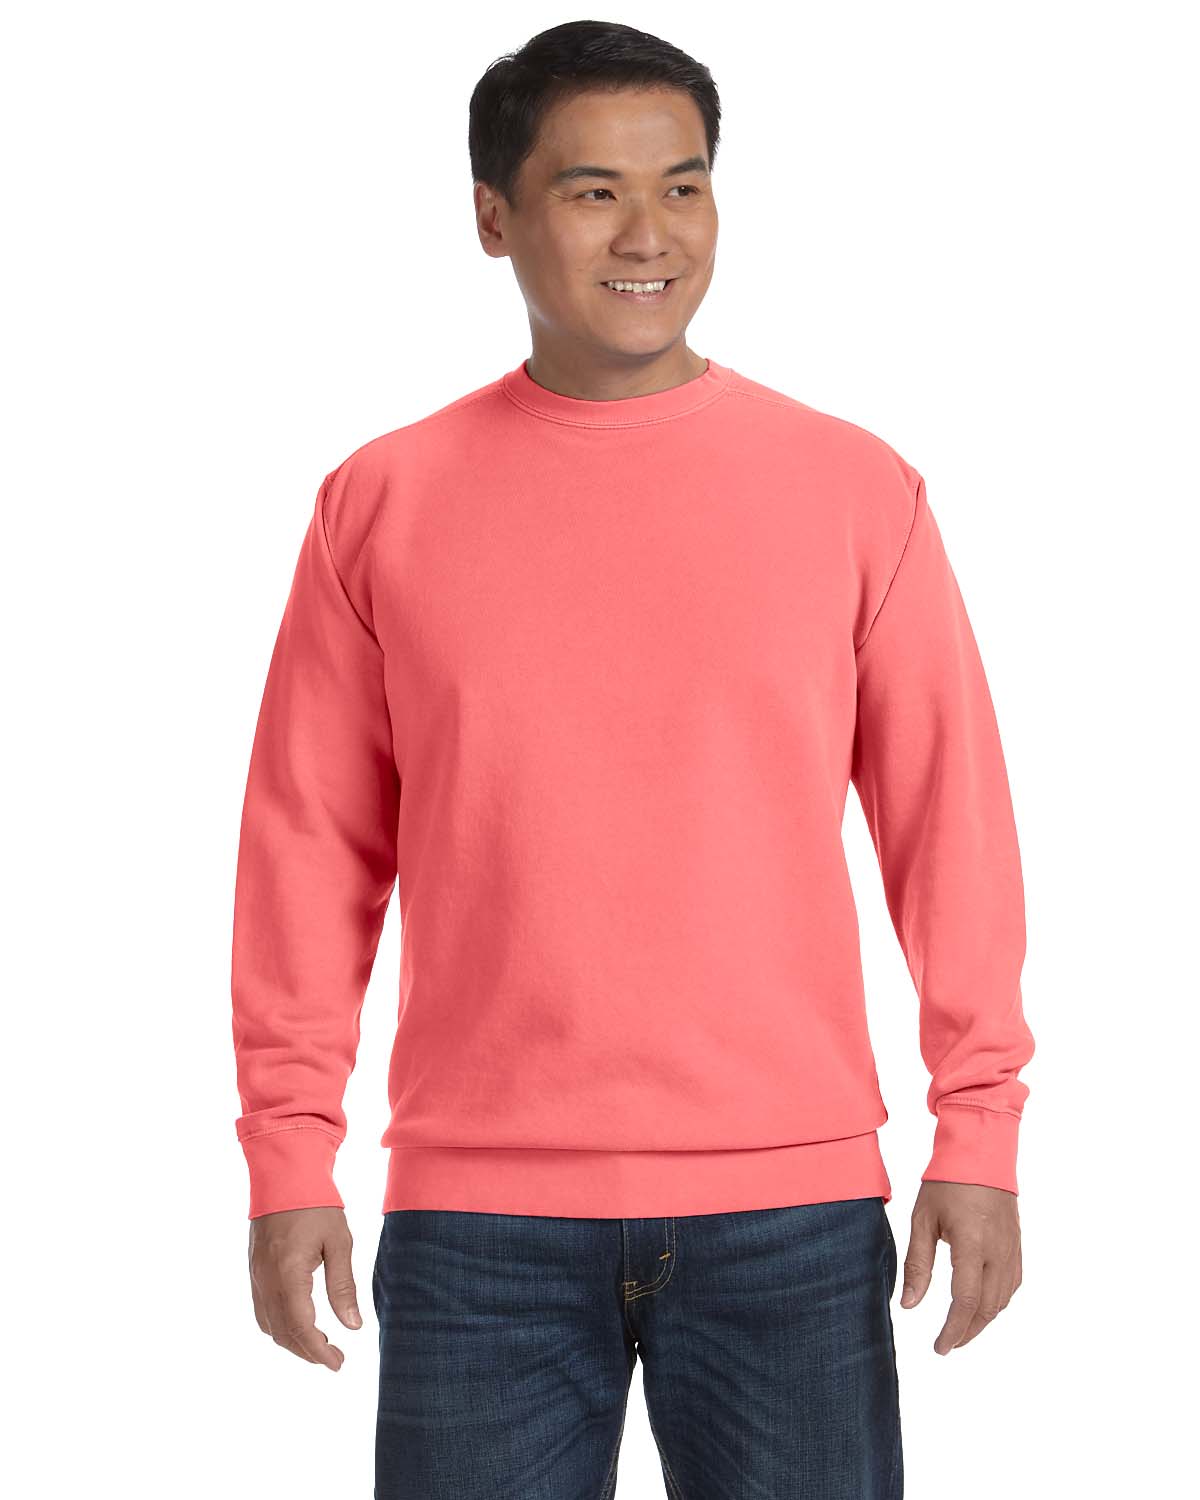 https://images.shirtspace.com/fullsize/NK5RhclYugu4eFsxsNykIw%3D%3D/98347/1735-comfort-colors-1566-ring-spun-crewneck-sweatshirt-front-watermelon.jpg